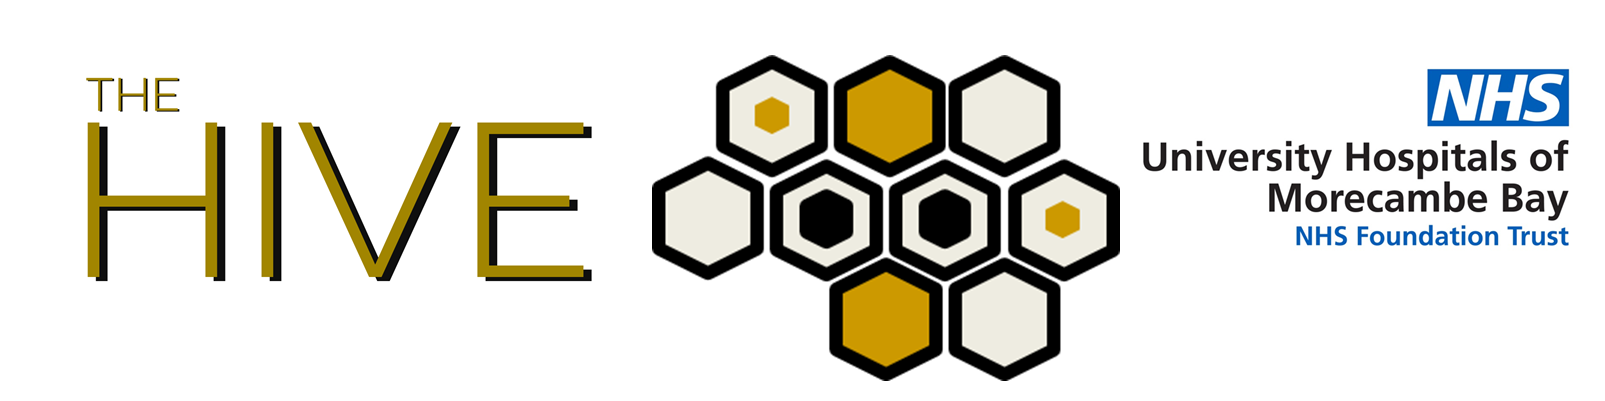 Hive transformation programme banner